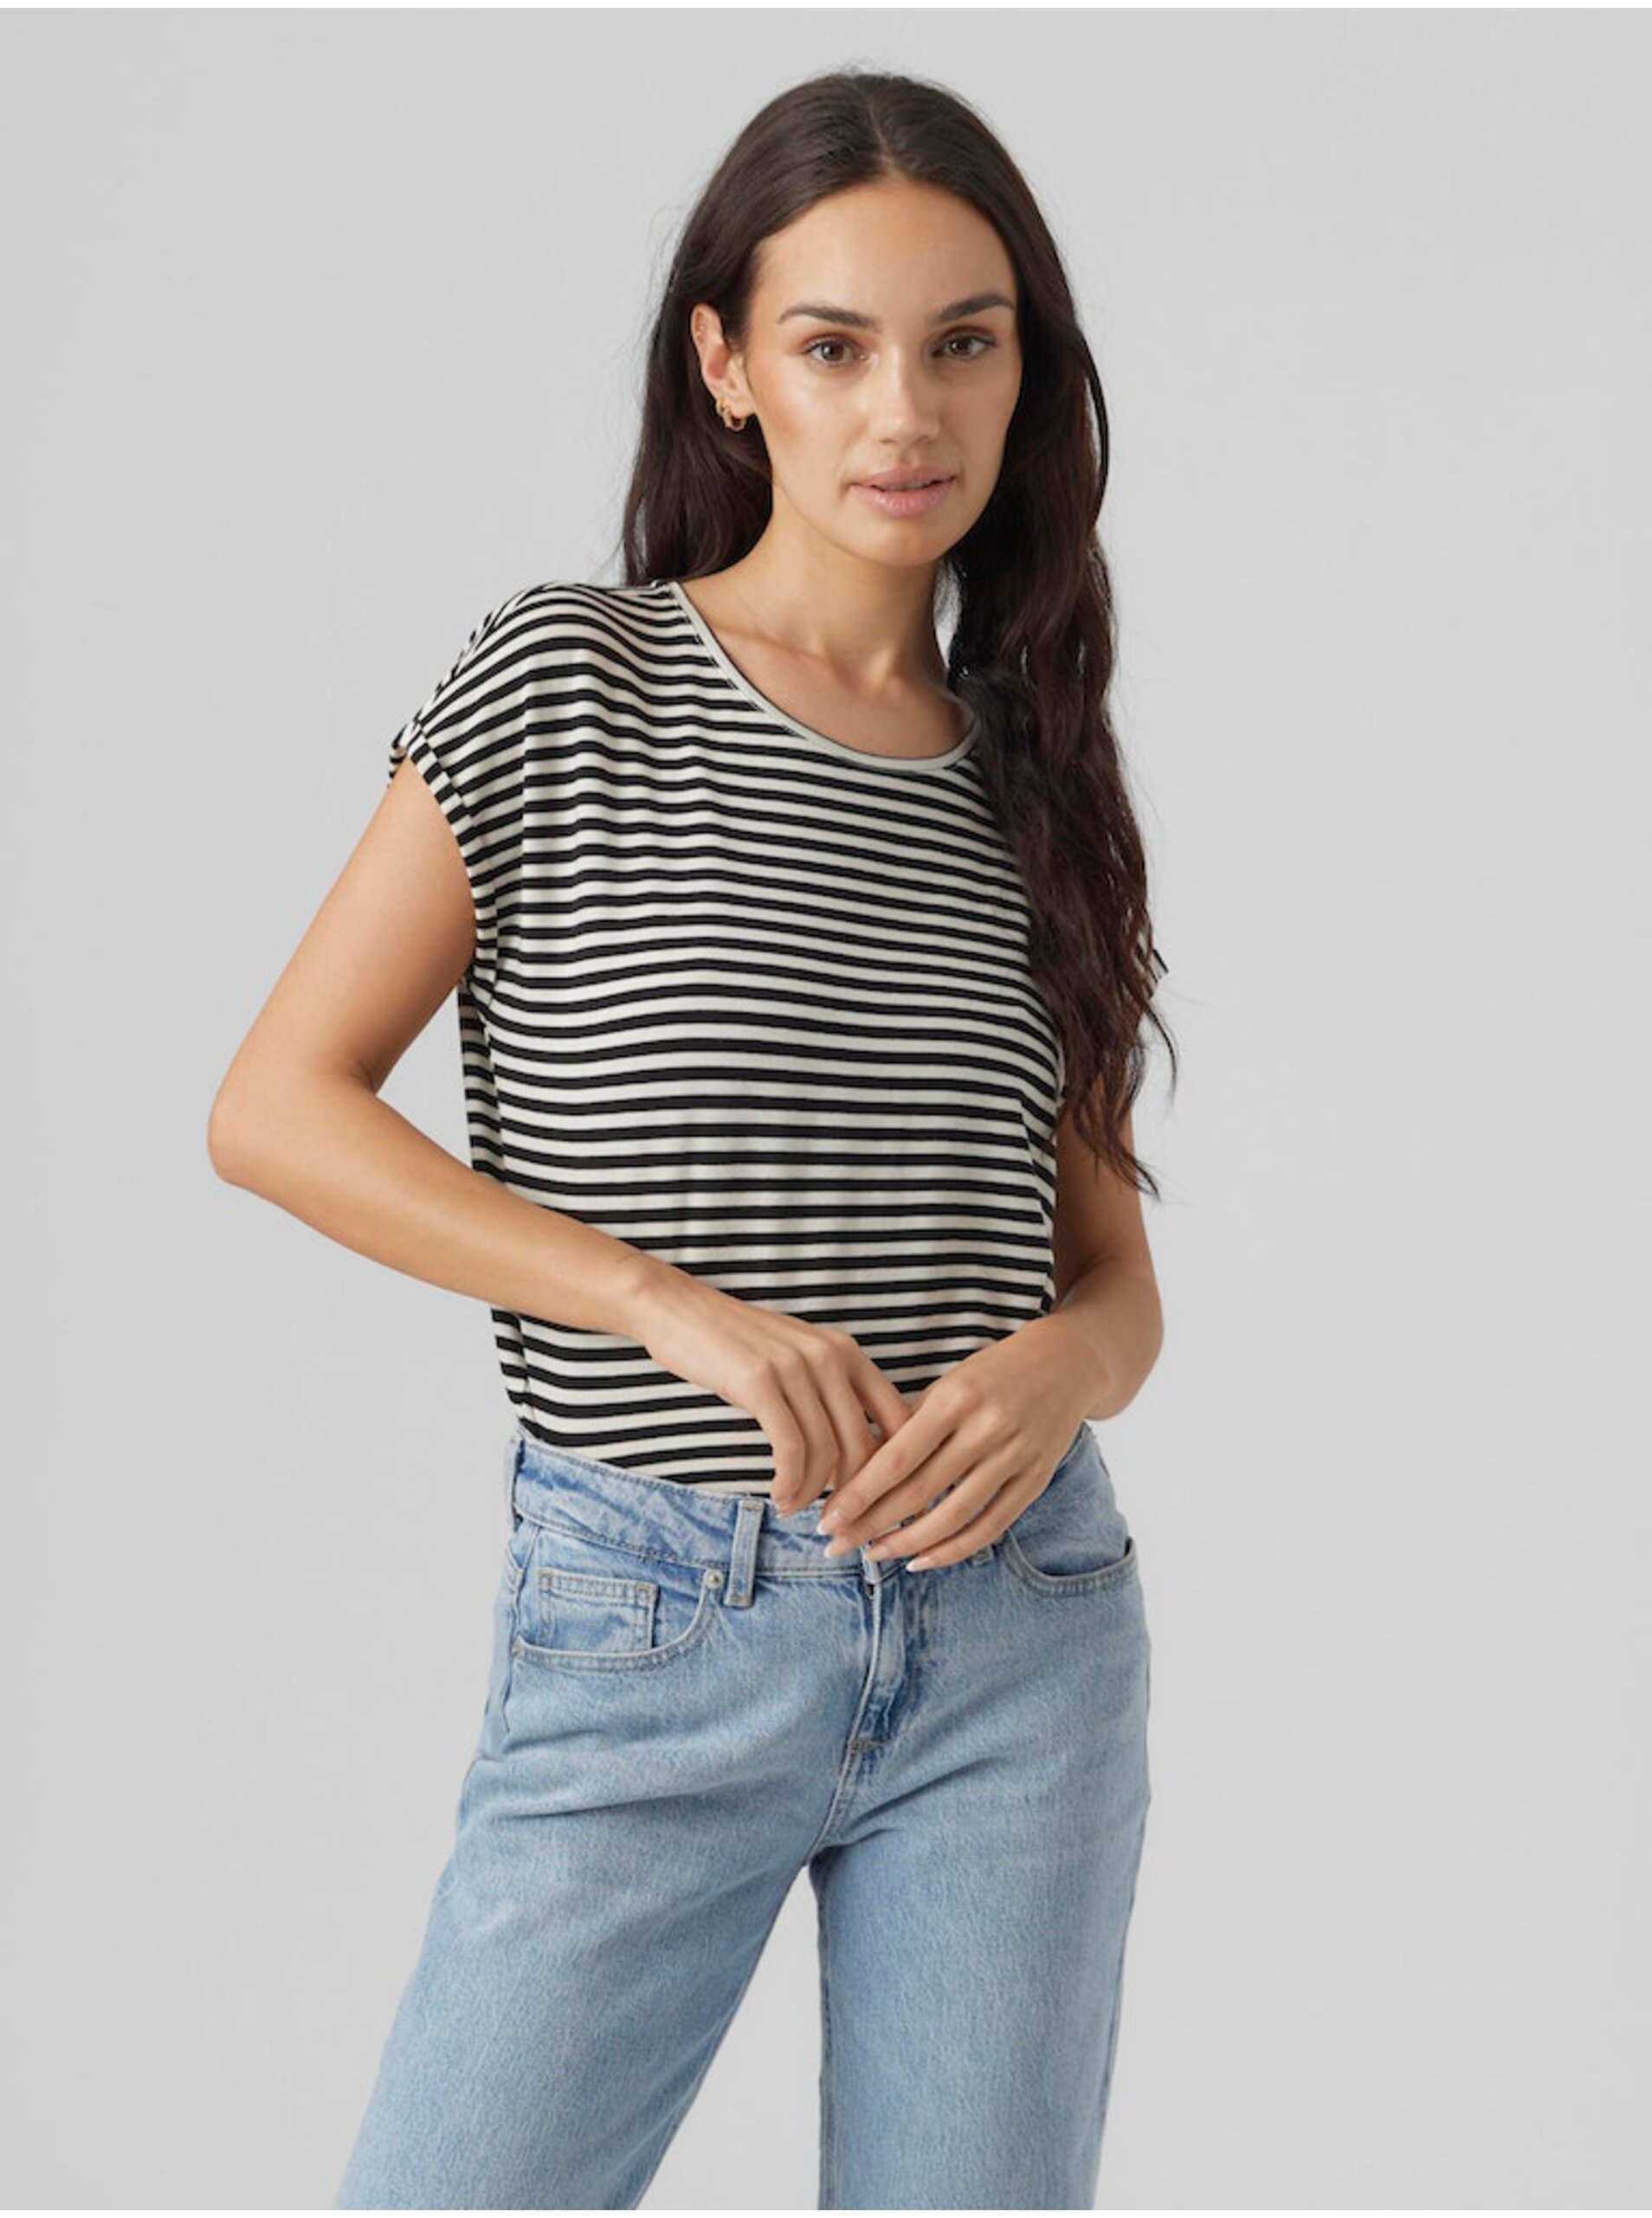 E-shop Bílo-černé dámské pruhované tričko Vero Moda Ava